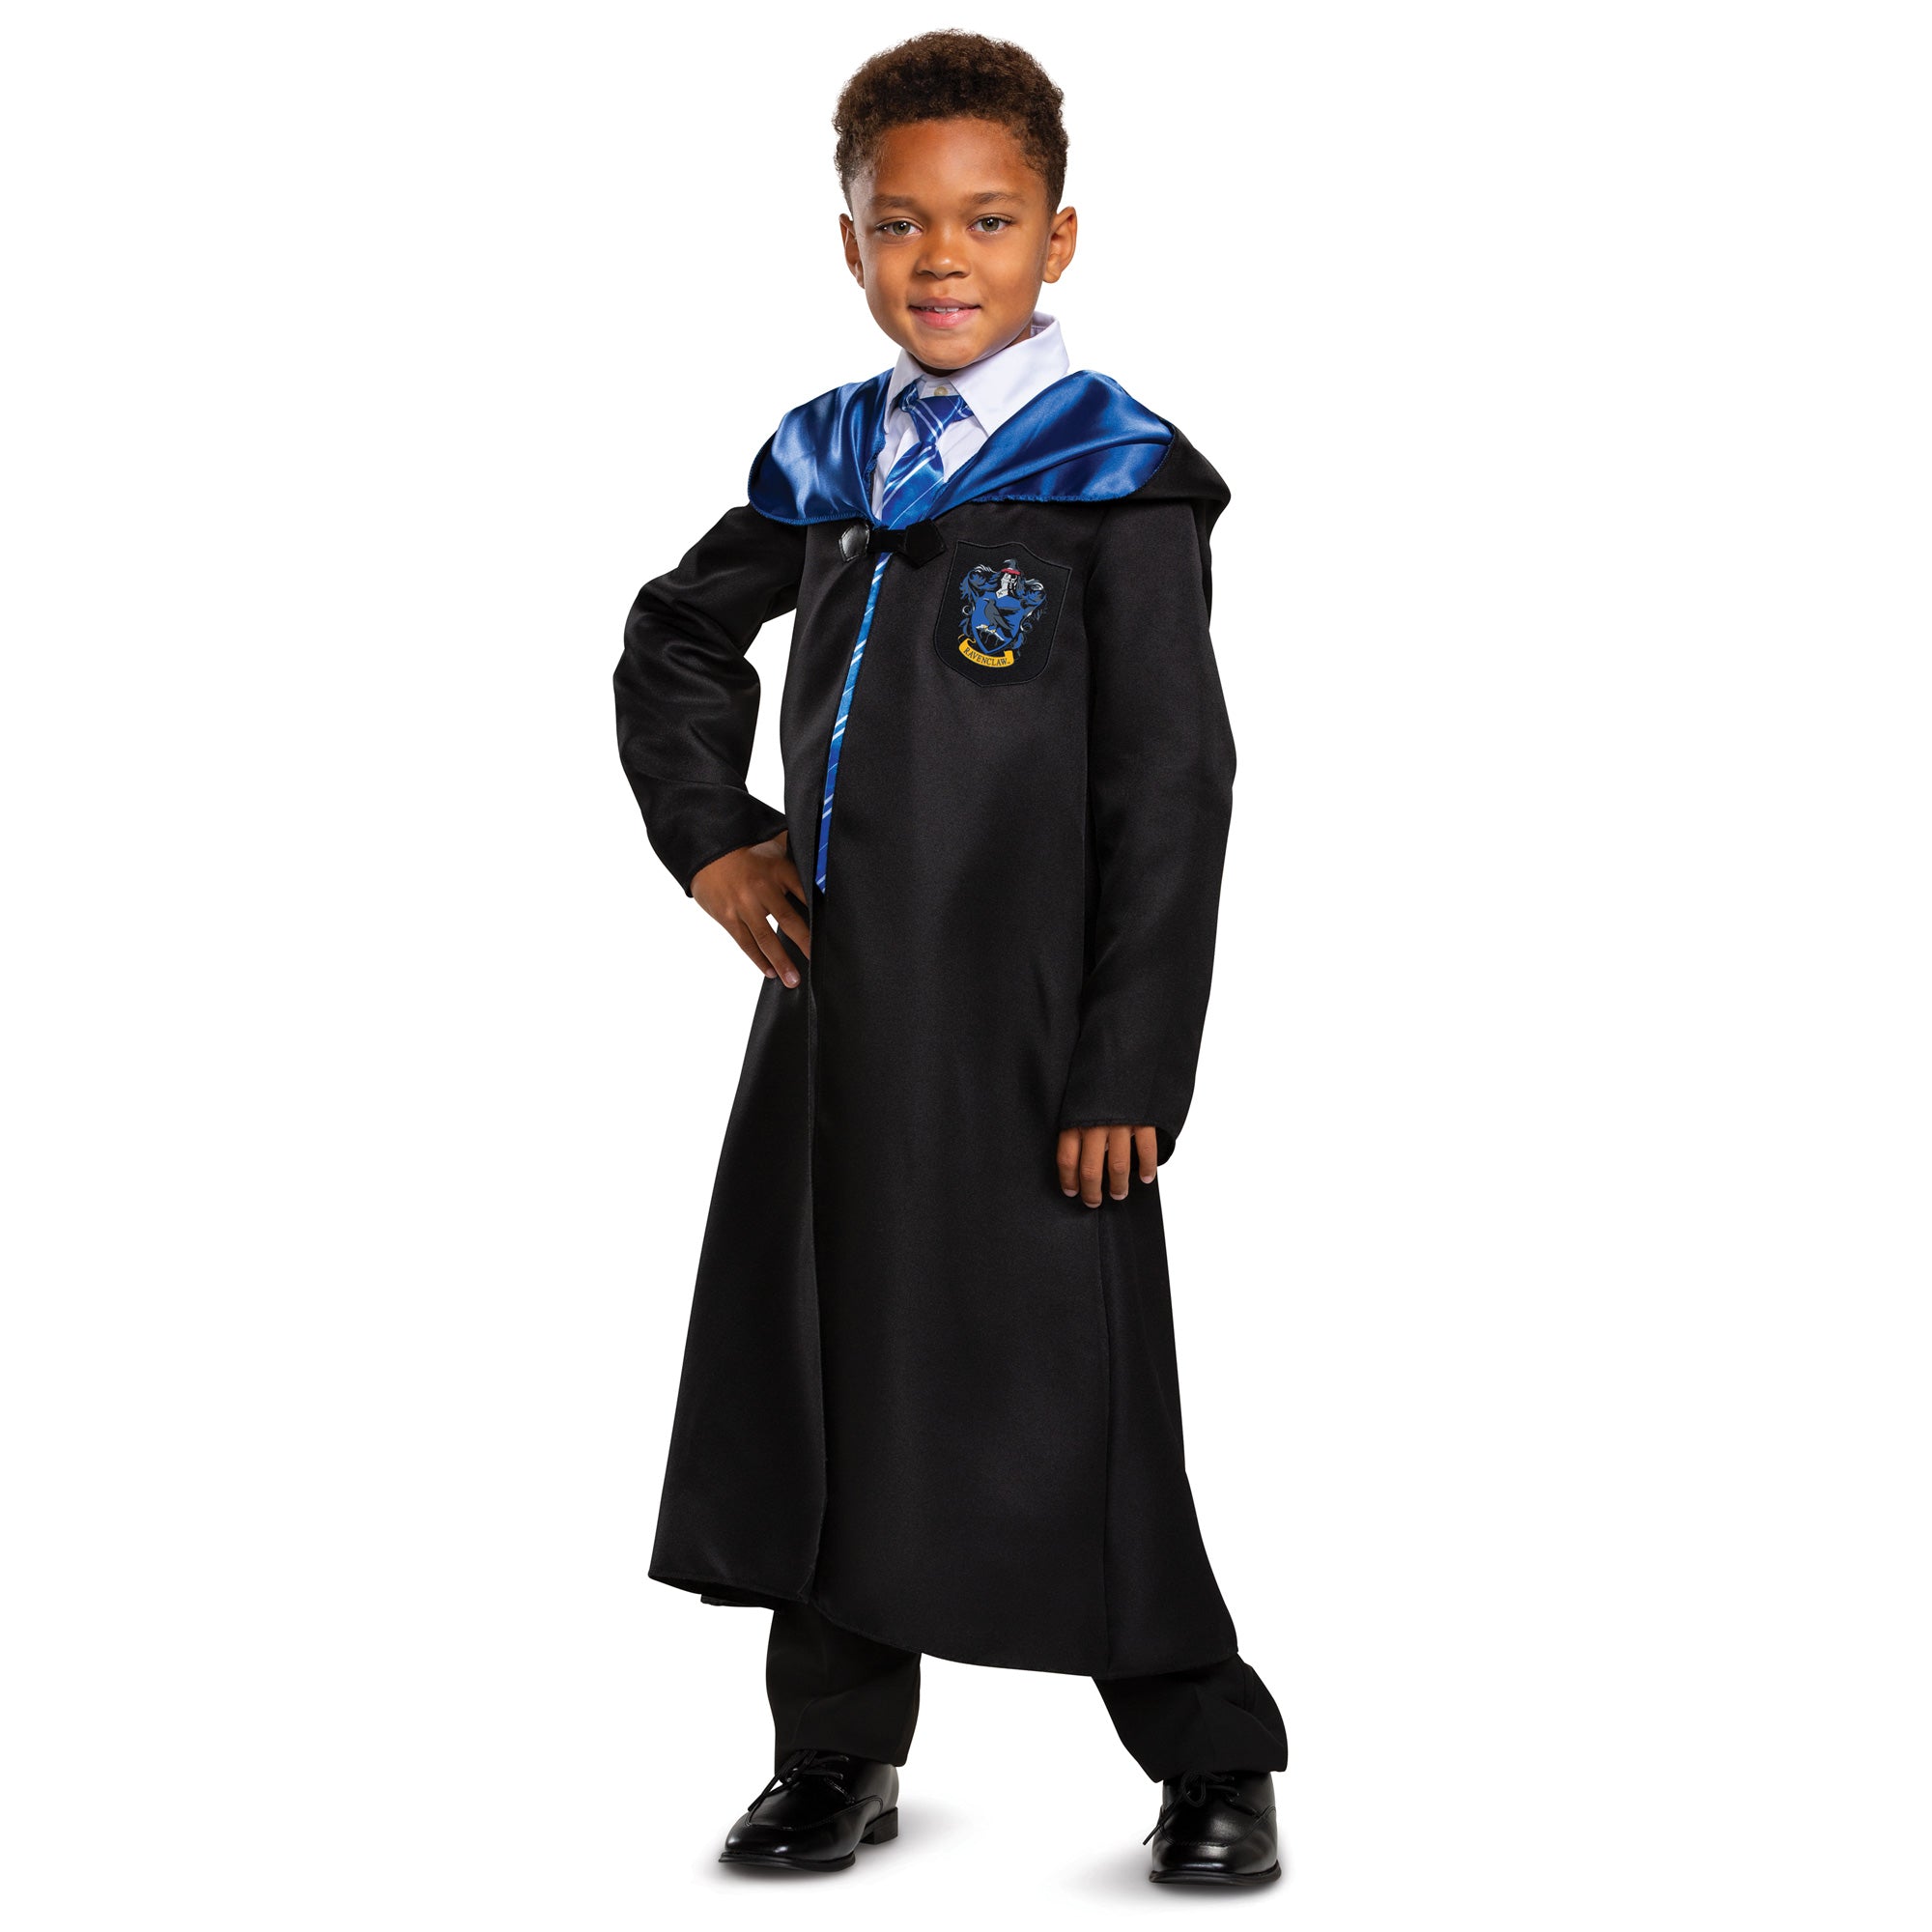 Harry Potter Cosplay Costume Gryffindor Ravenclaw Robe Cloak Adult Kids  Dress